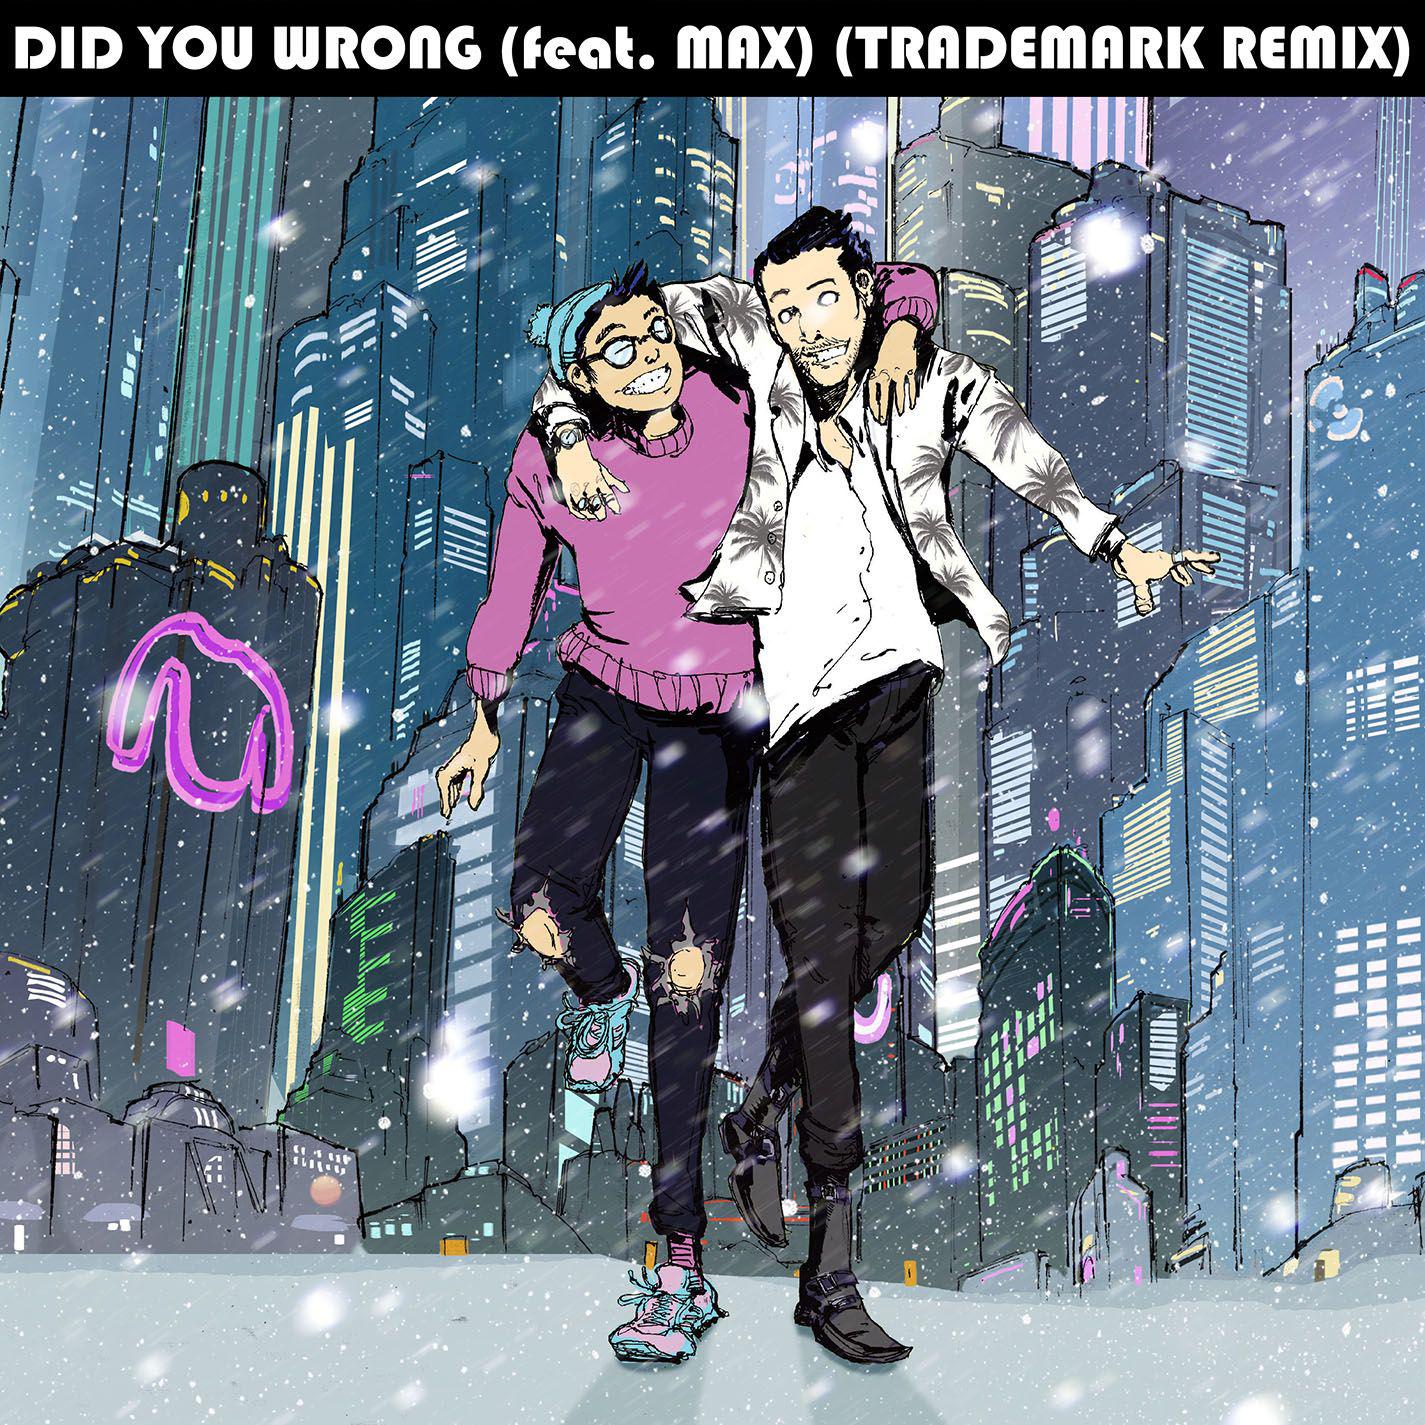 Did You Wrong (Trademark Remix)